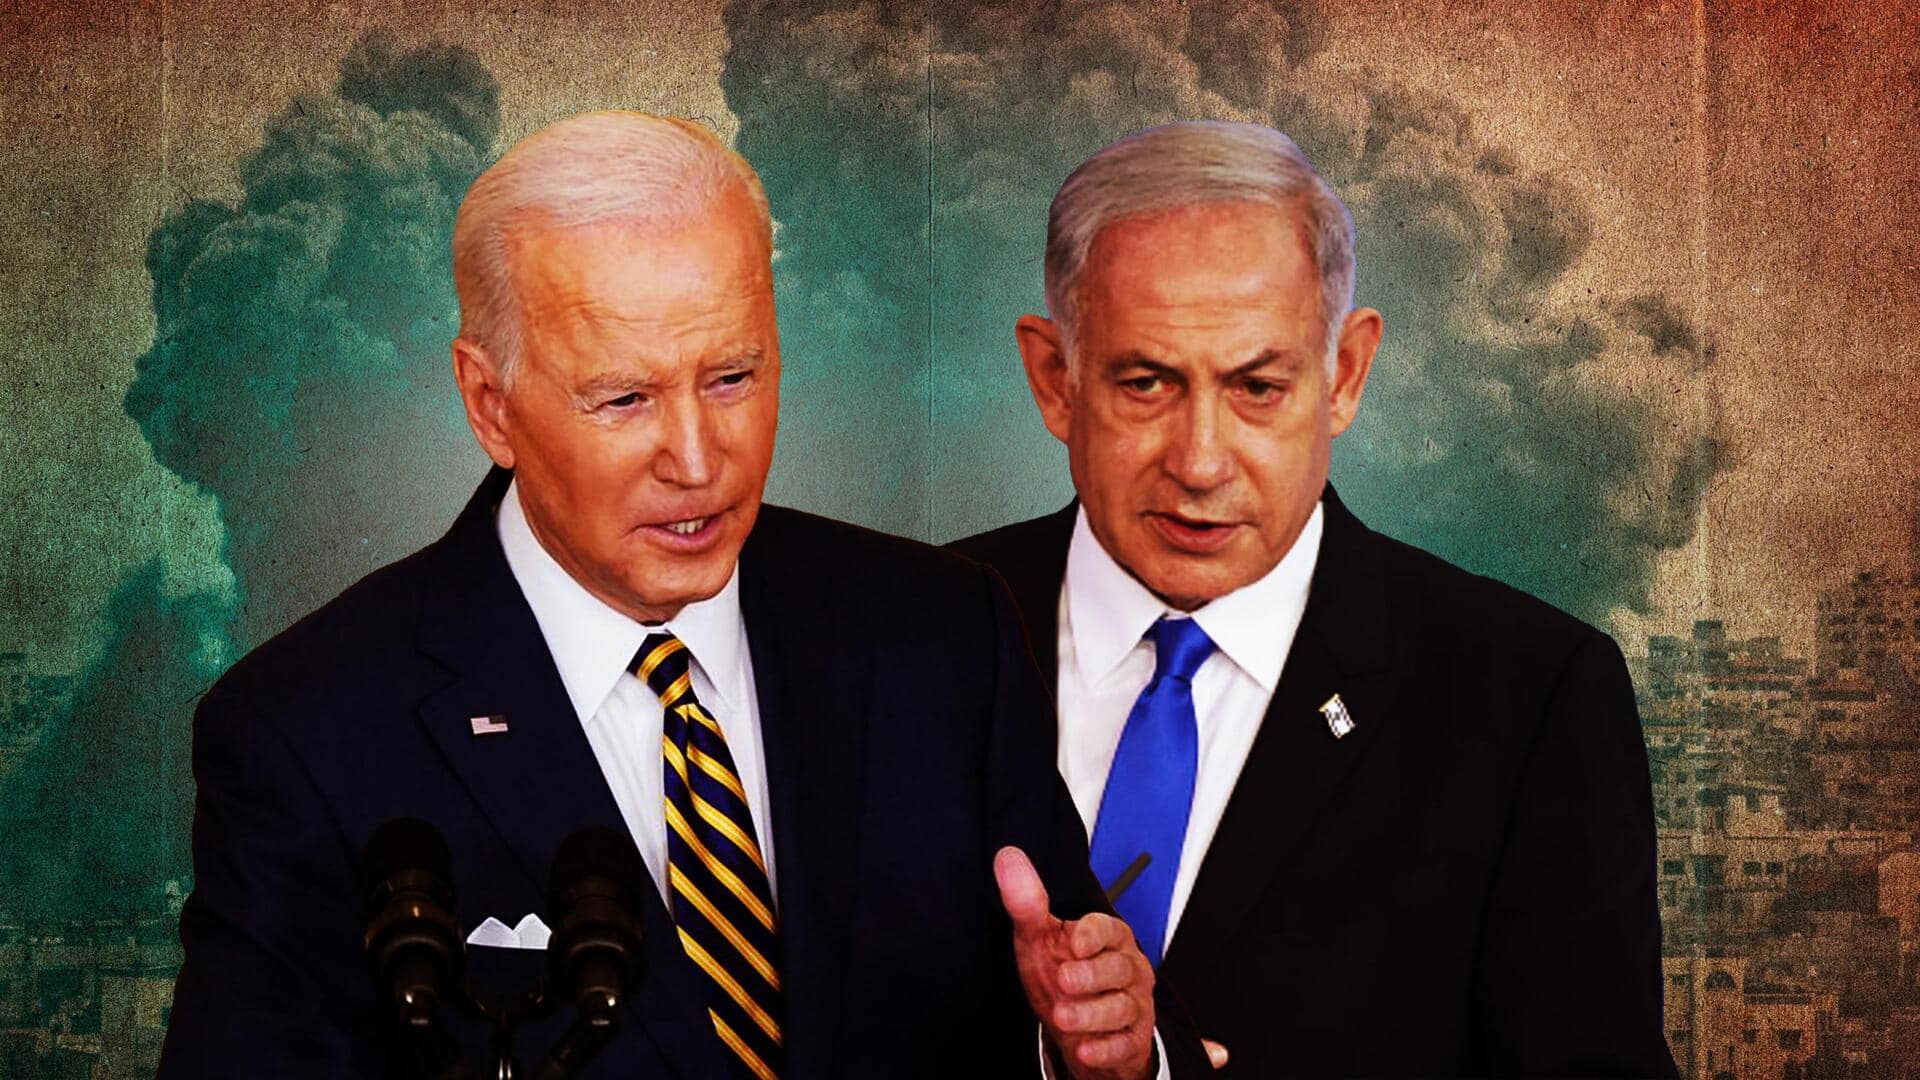 Every Hamas member is a dead man: Israel's PM Netanyahu